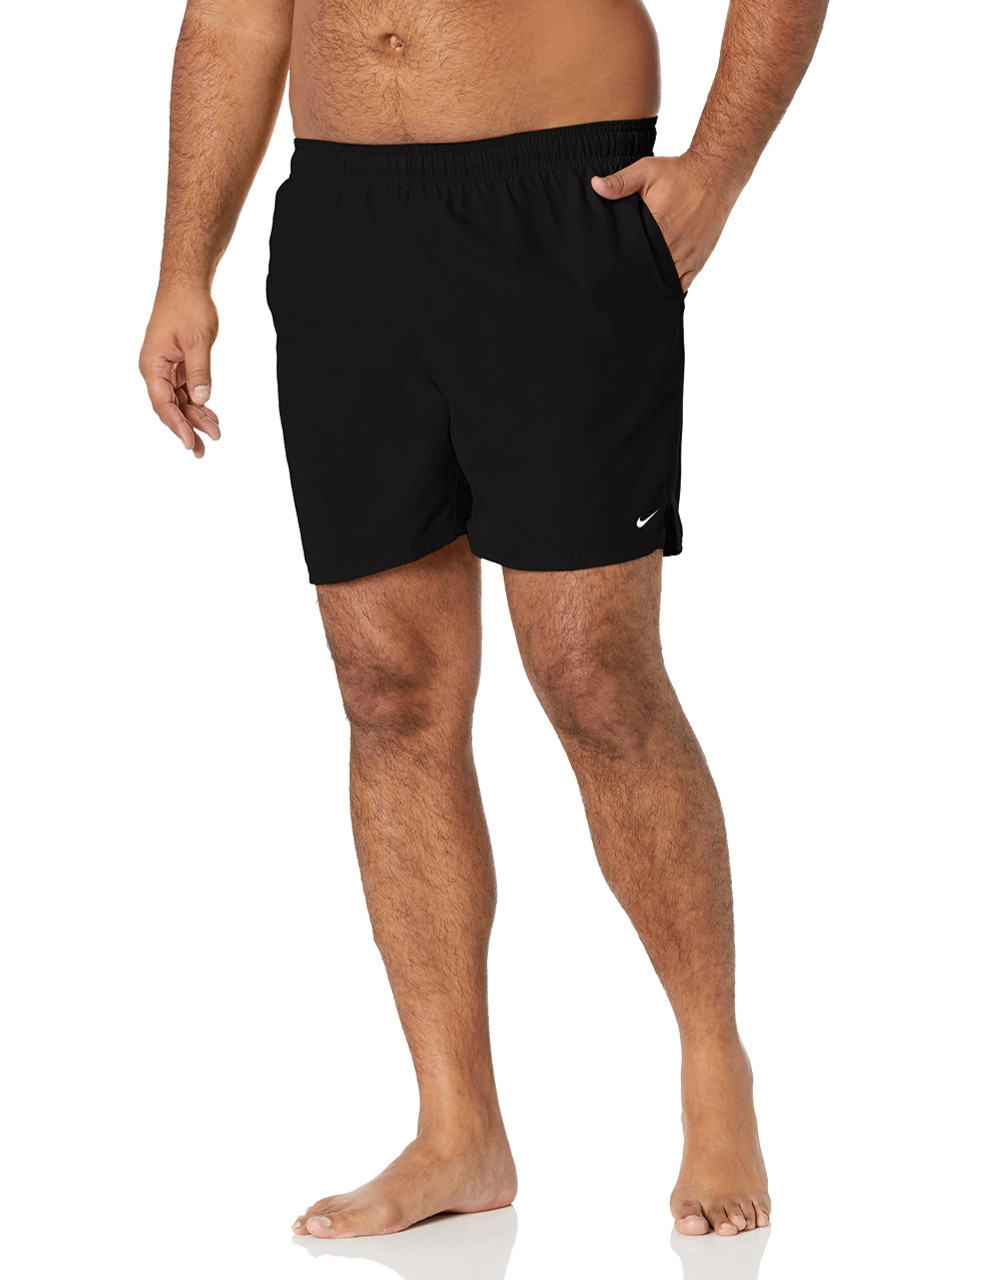 Nike Mens Solid Lap 7 Inch Volley Short Swim Trunk - Black White - XL  NESSA559-001-XL - Jacob Time Inc